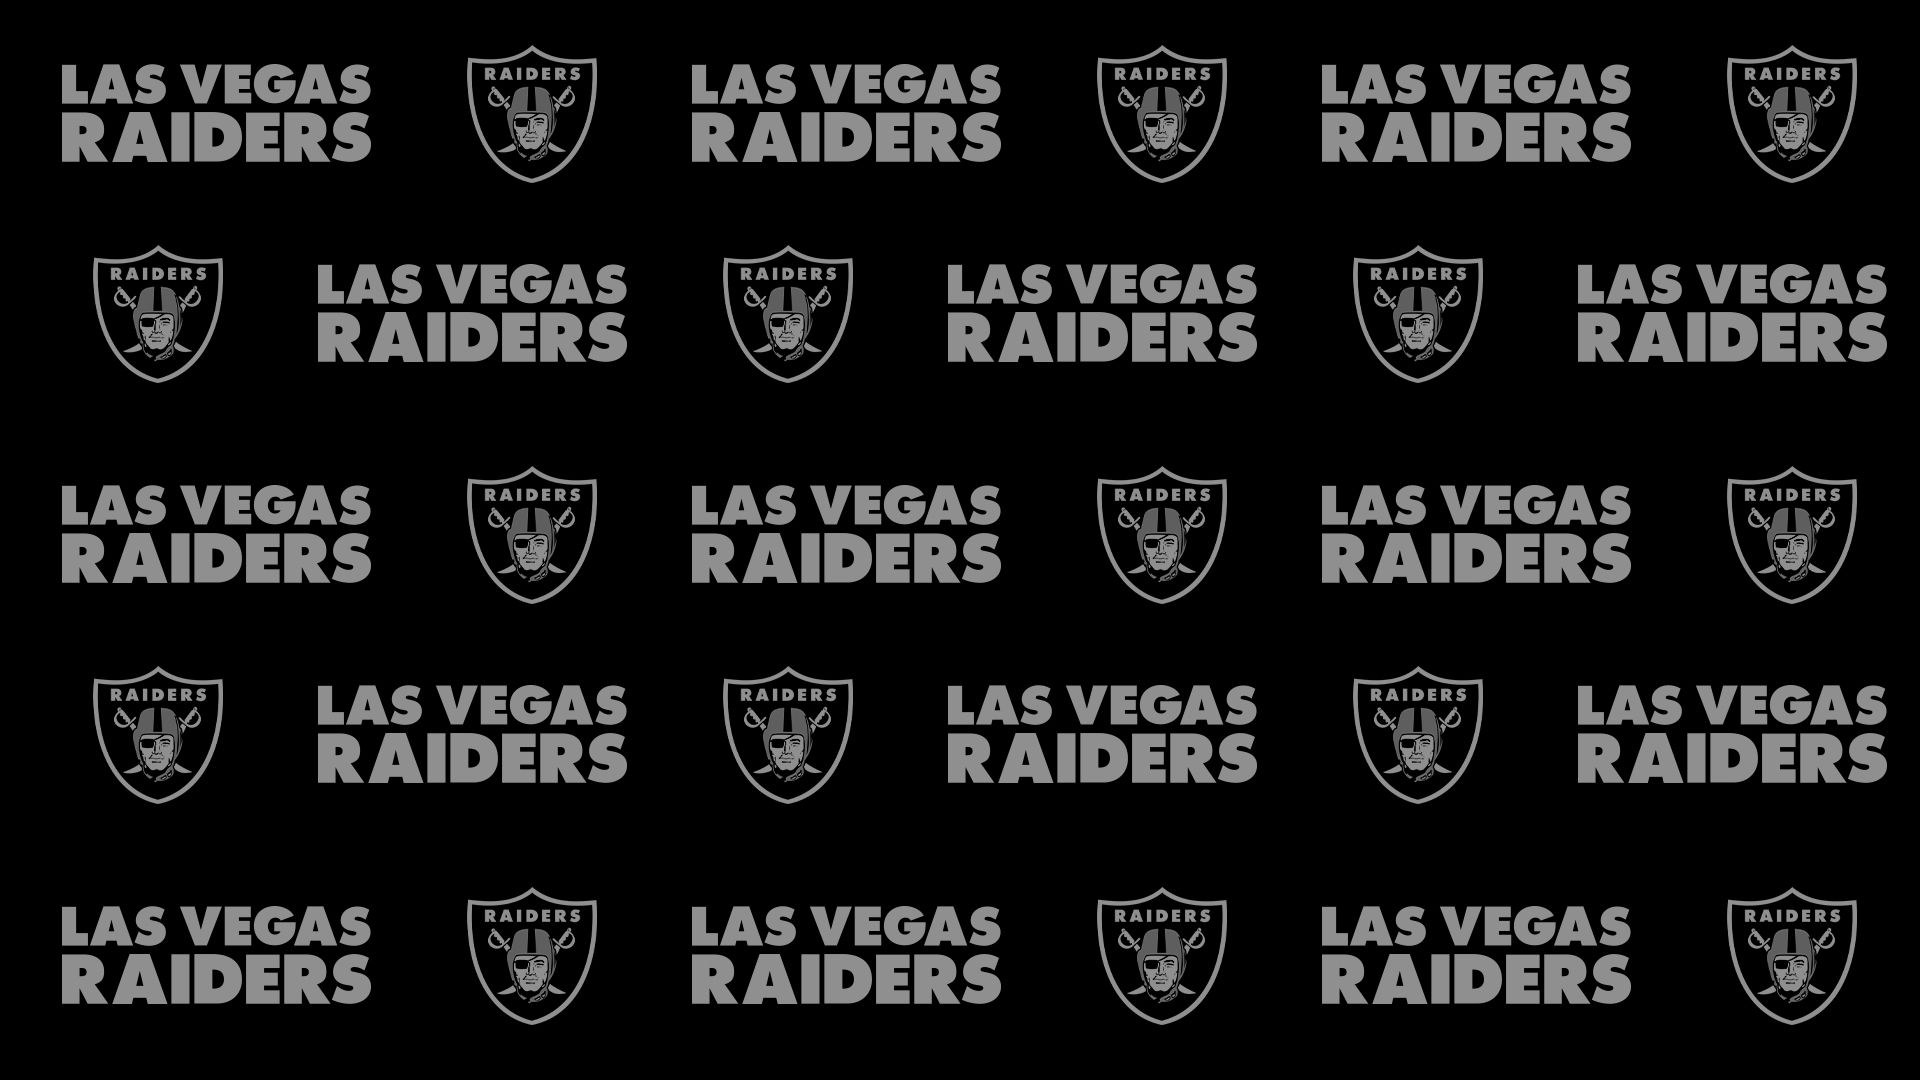 Free download Video Conference Backgrounds Las Vegas Raiders Raiderscom ...